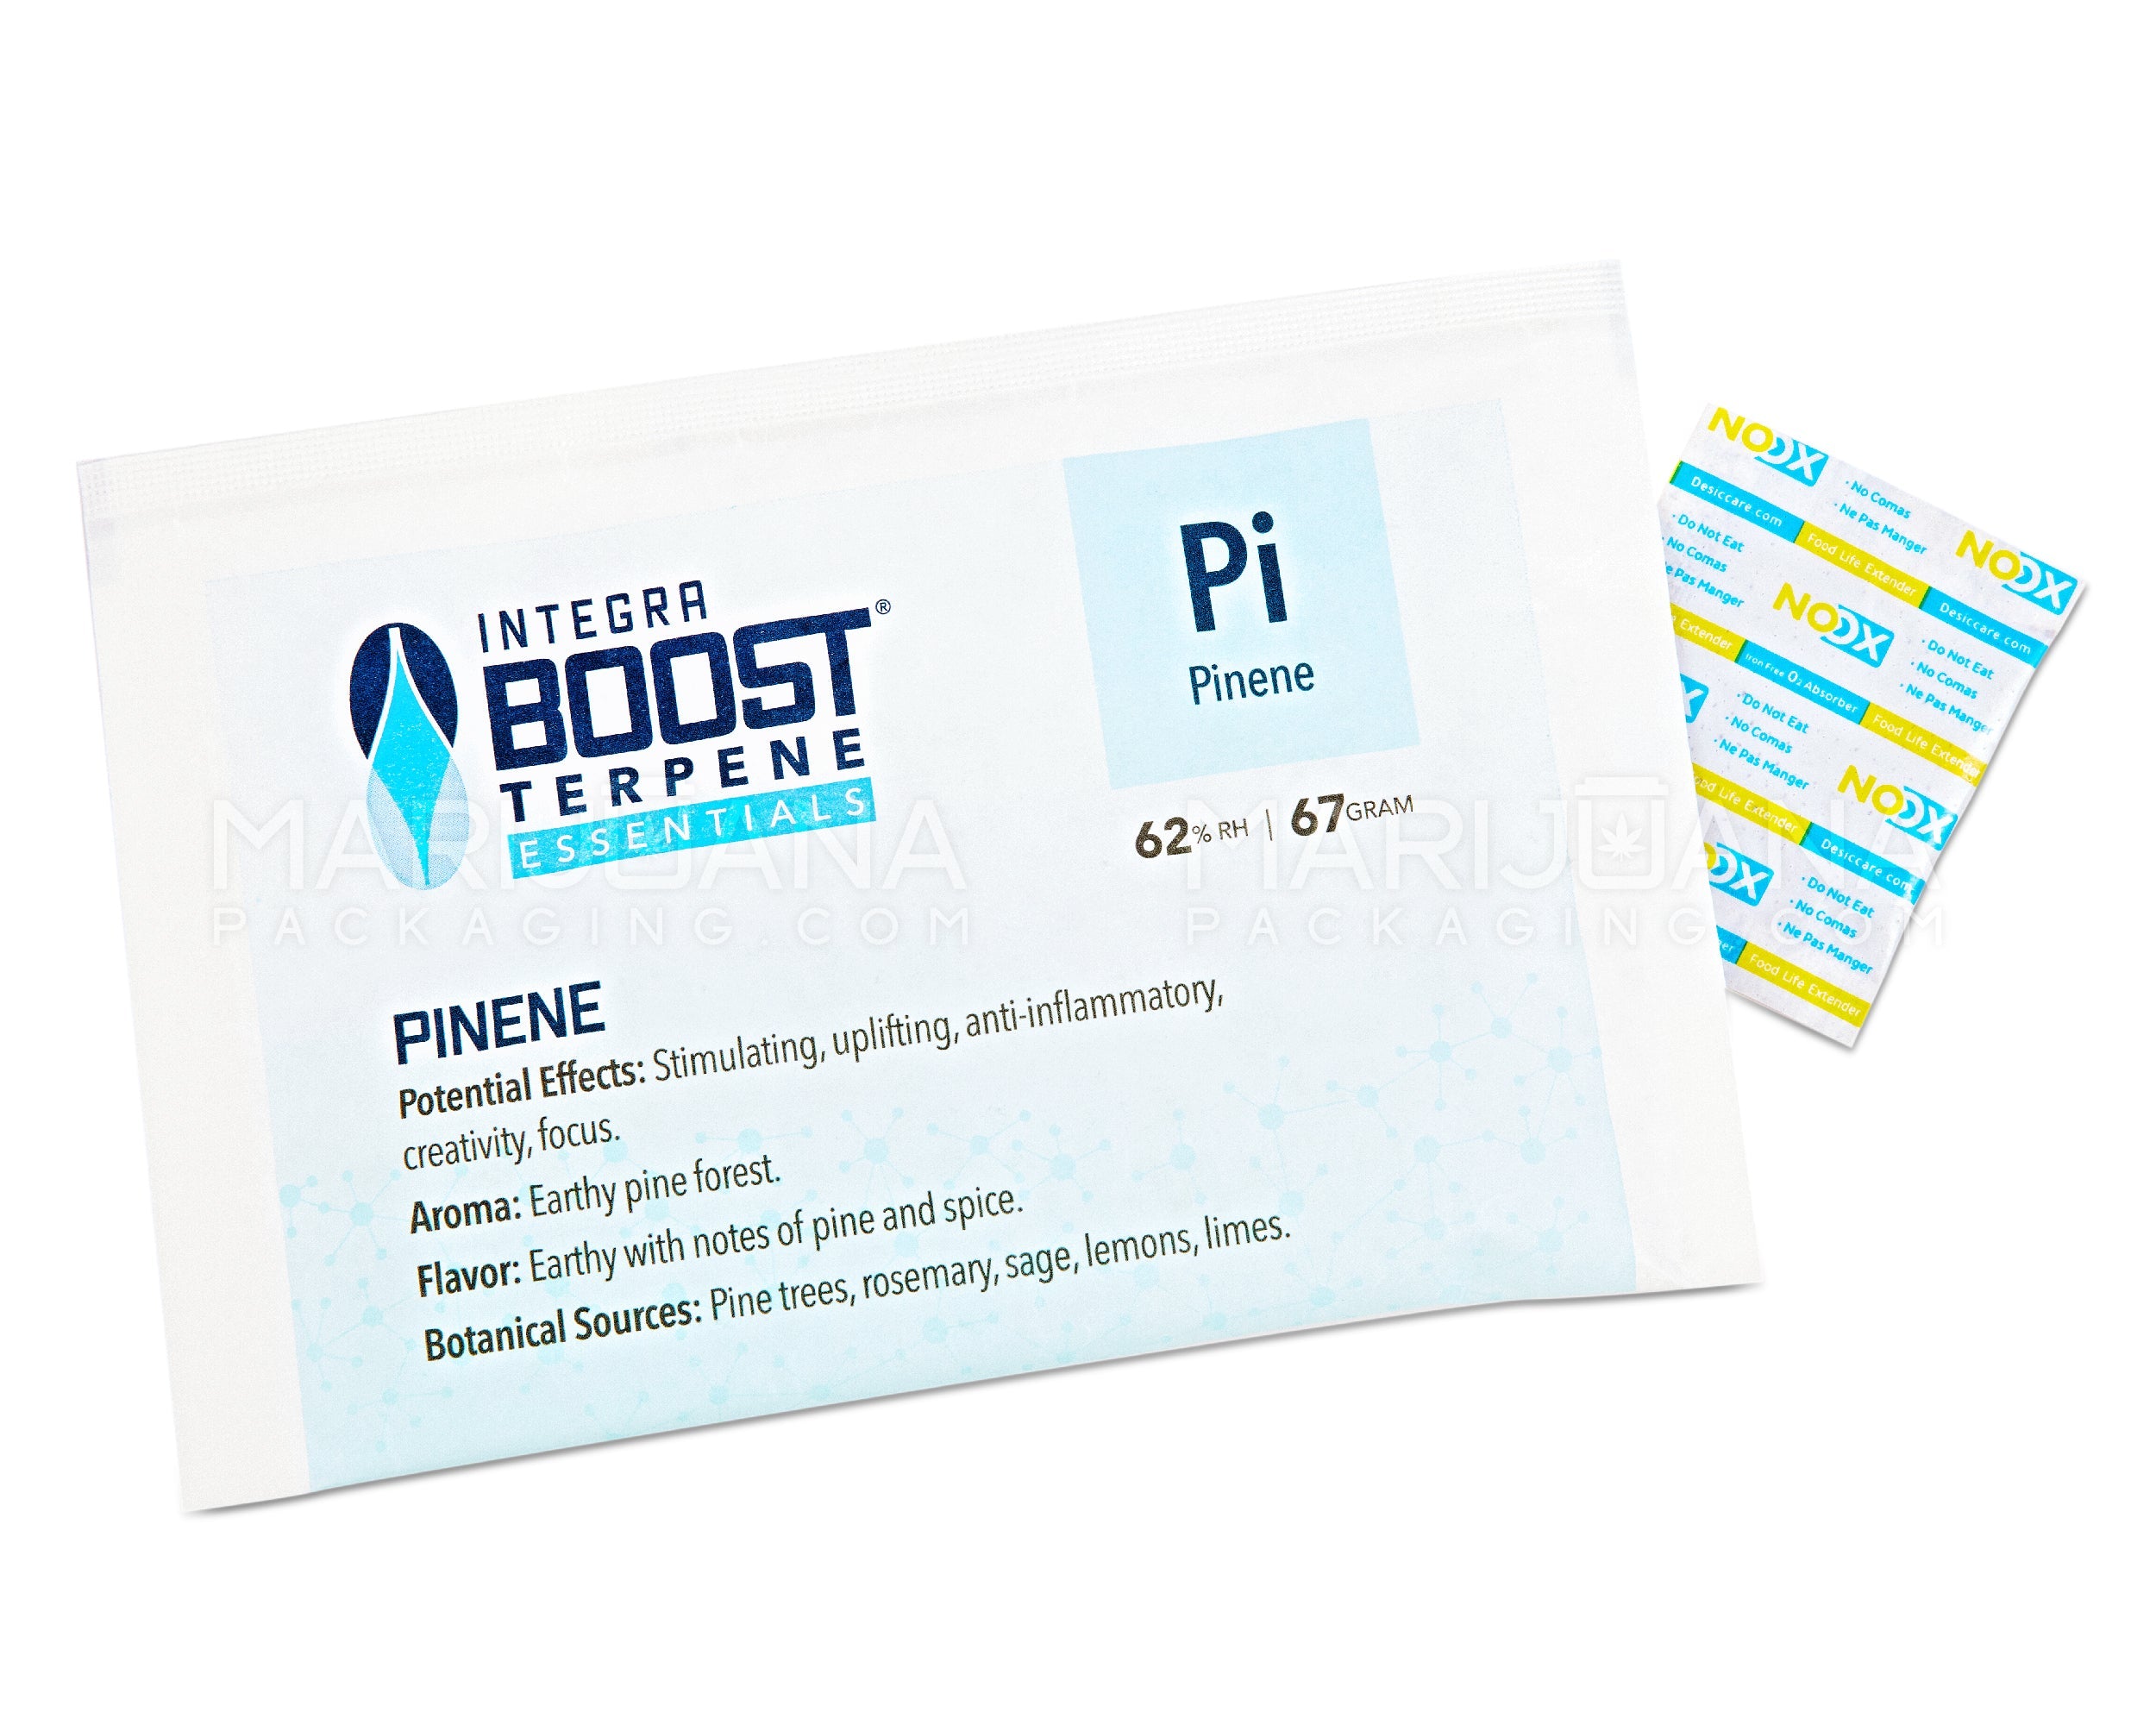 INTEGRA Boost Terpene Essentials Pinene Humidity Pack | 67 Grams - 62% | Sample - 3